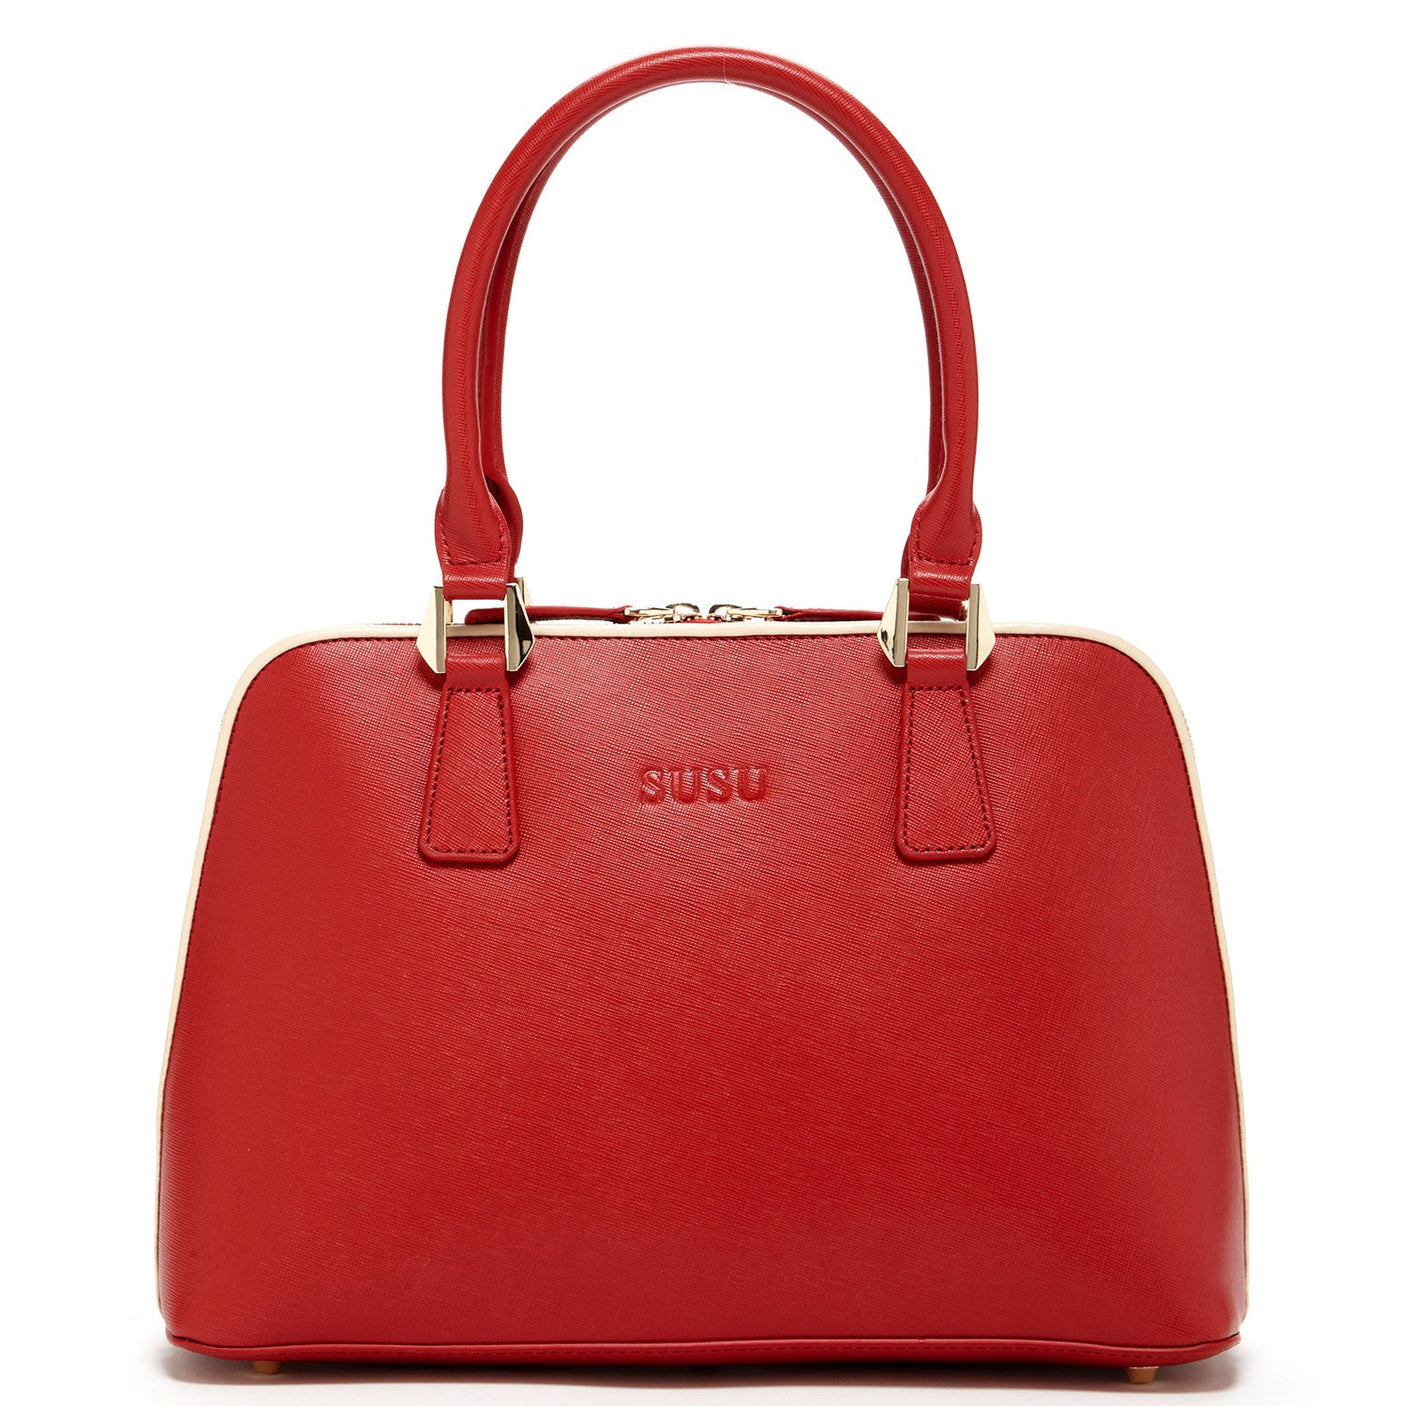 Meet Prada's New Line Of Work-Friendly Saffiano Leather Bags